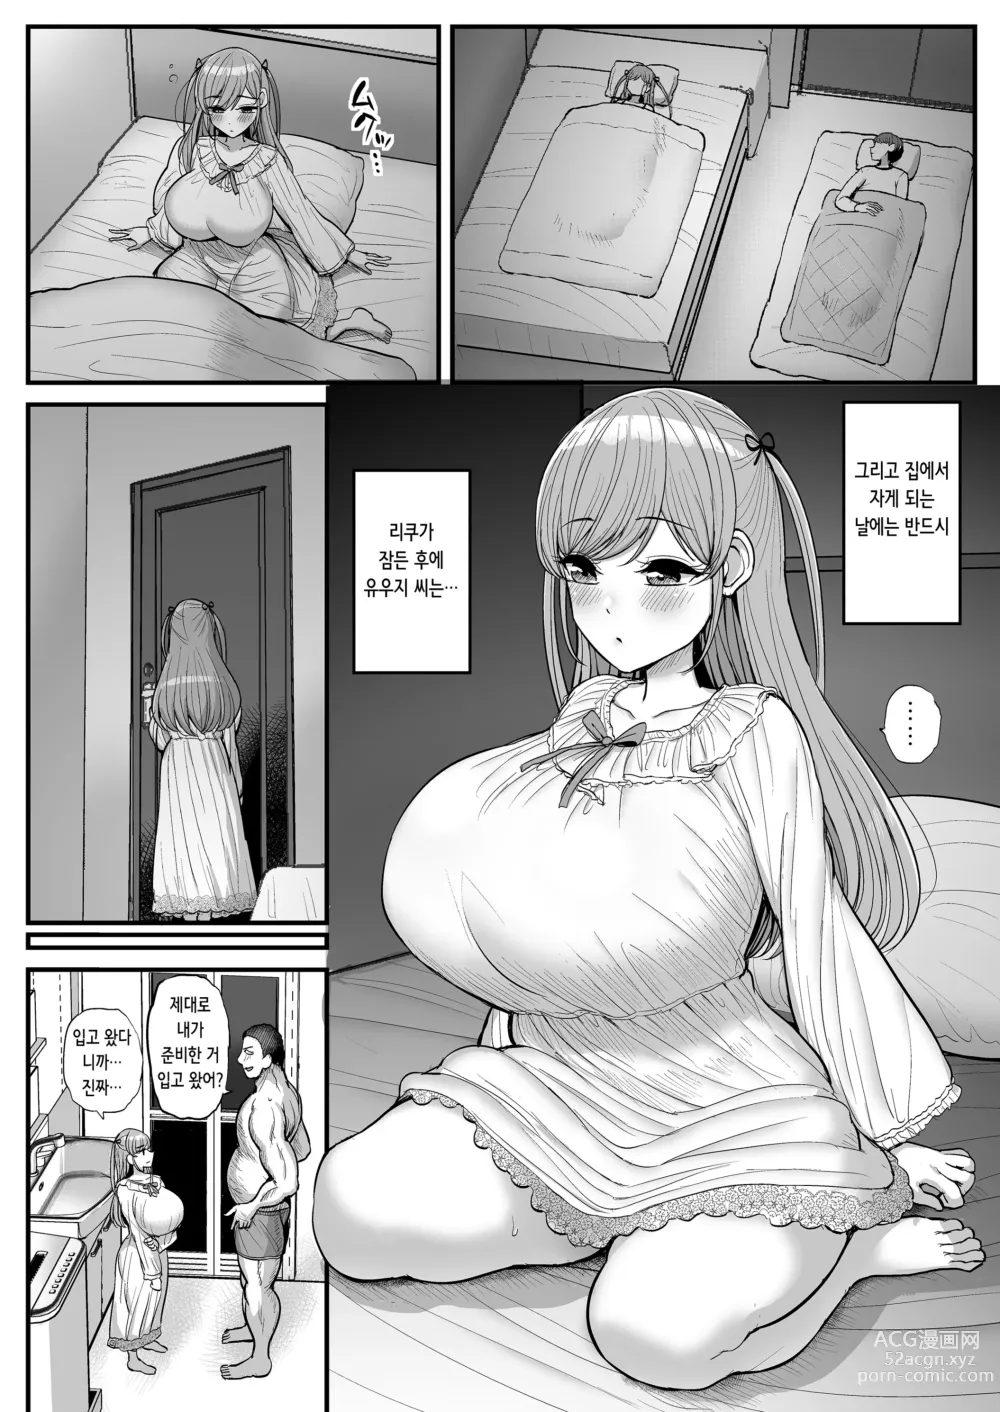 Page 7 of doujinshi 미니멈 여자친구는 아버지의 성노예 -졸업 편-